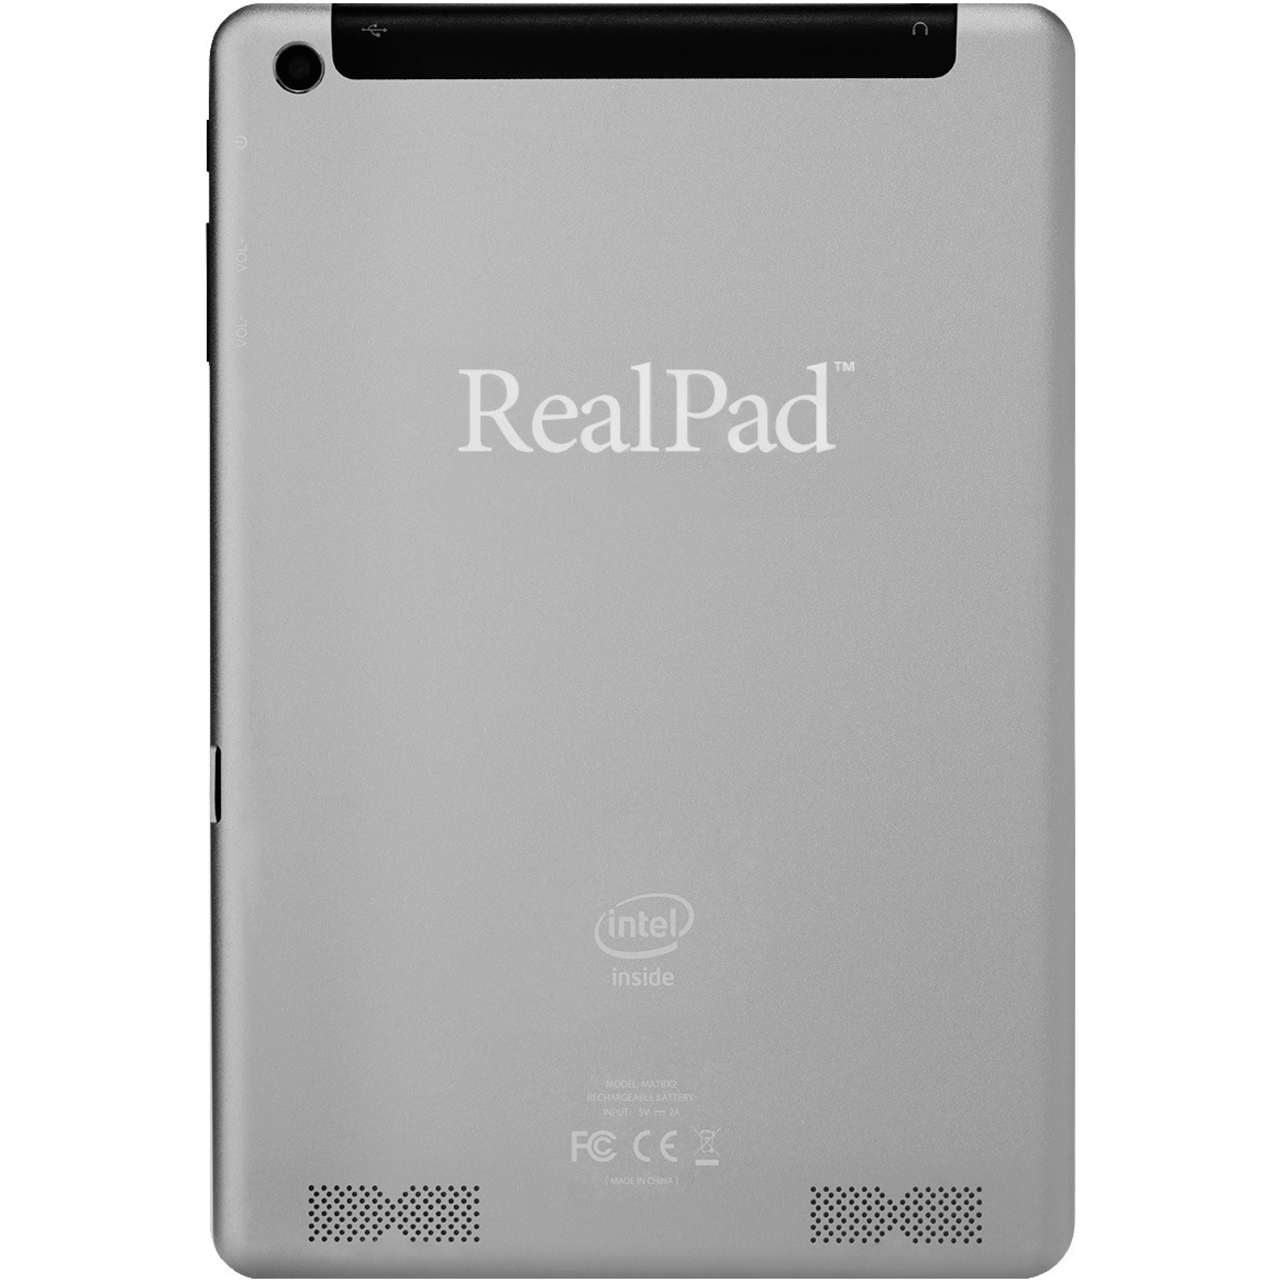 AARP RealPad MA7BX2 Tablet, 7.9", 1 GB, 16 GB Storage, Android 4.4 KitKat, Black - image 2 of 6